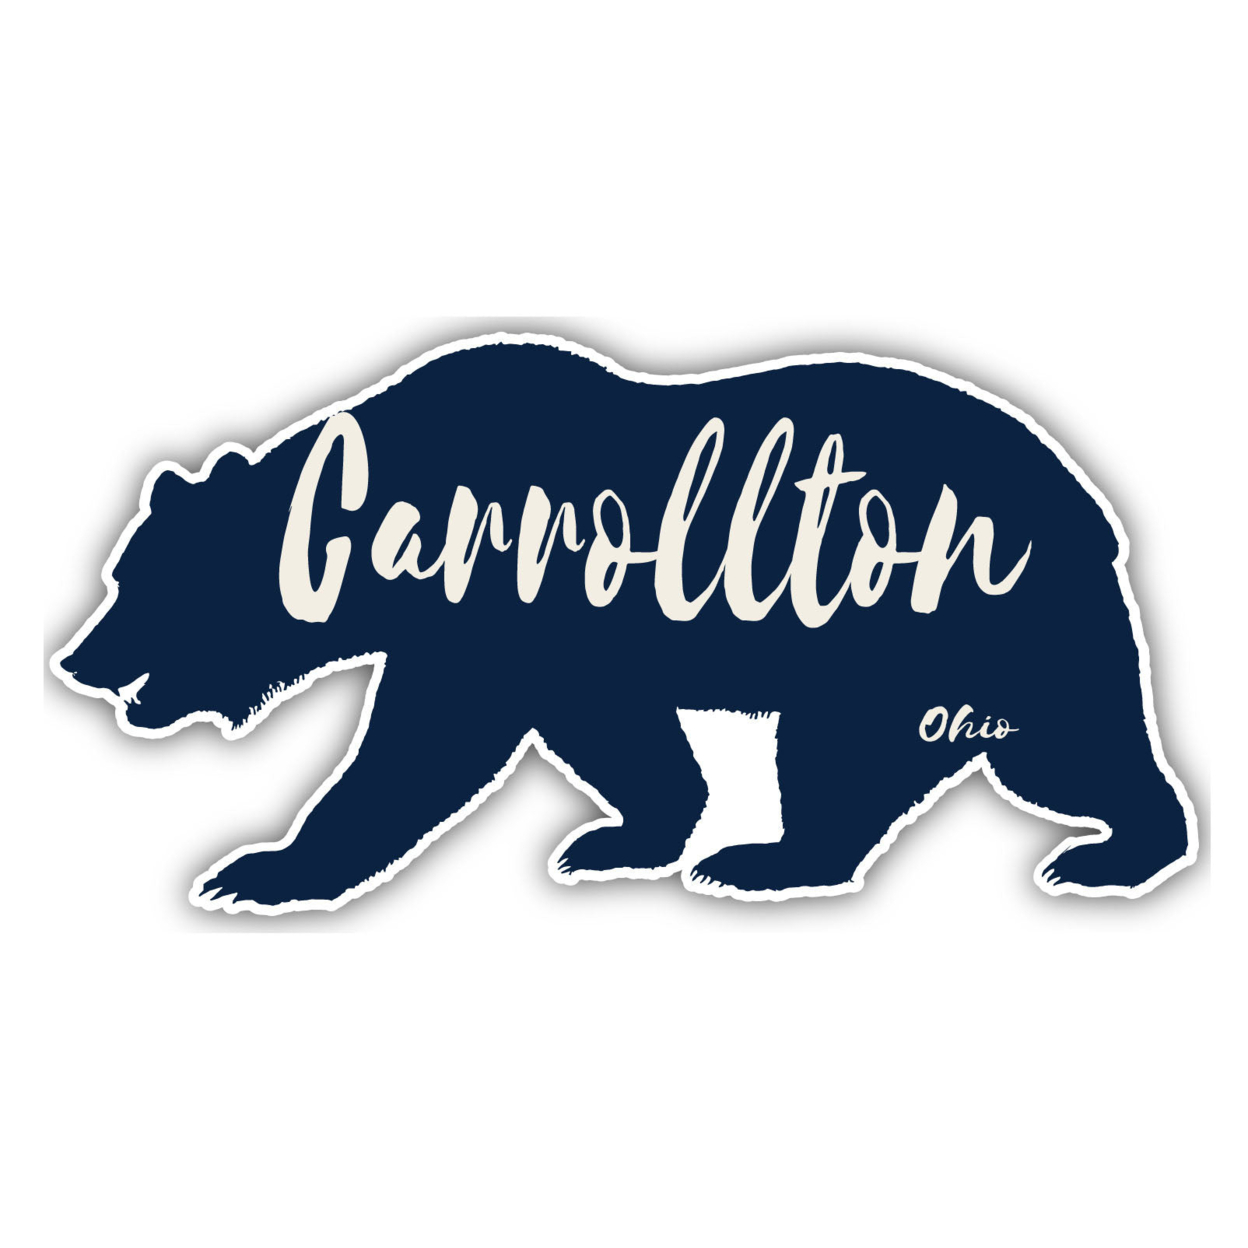 Carrollton Ohio Souvenir Decorative Stickers (Choose Theme And Size) - Single Unit, 6-Inch, Bear